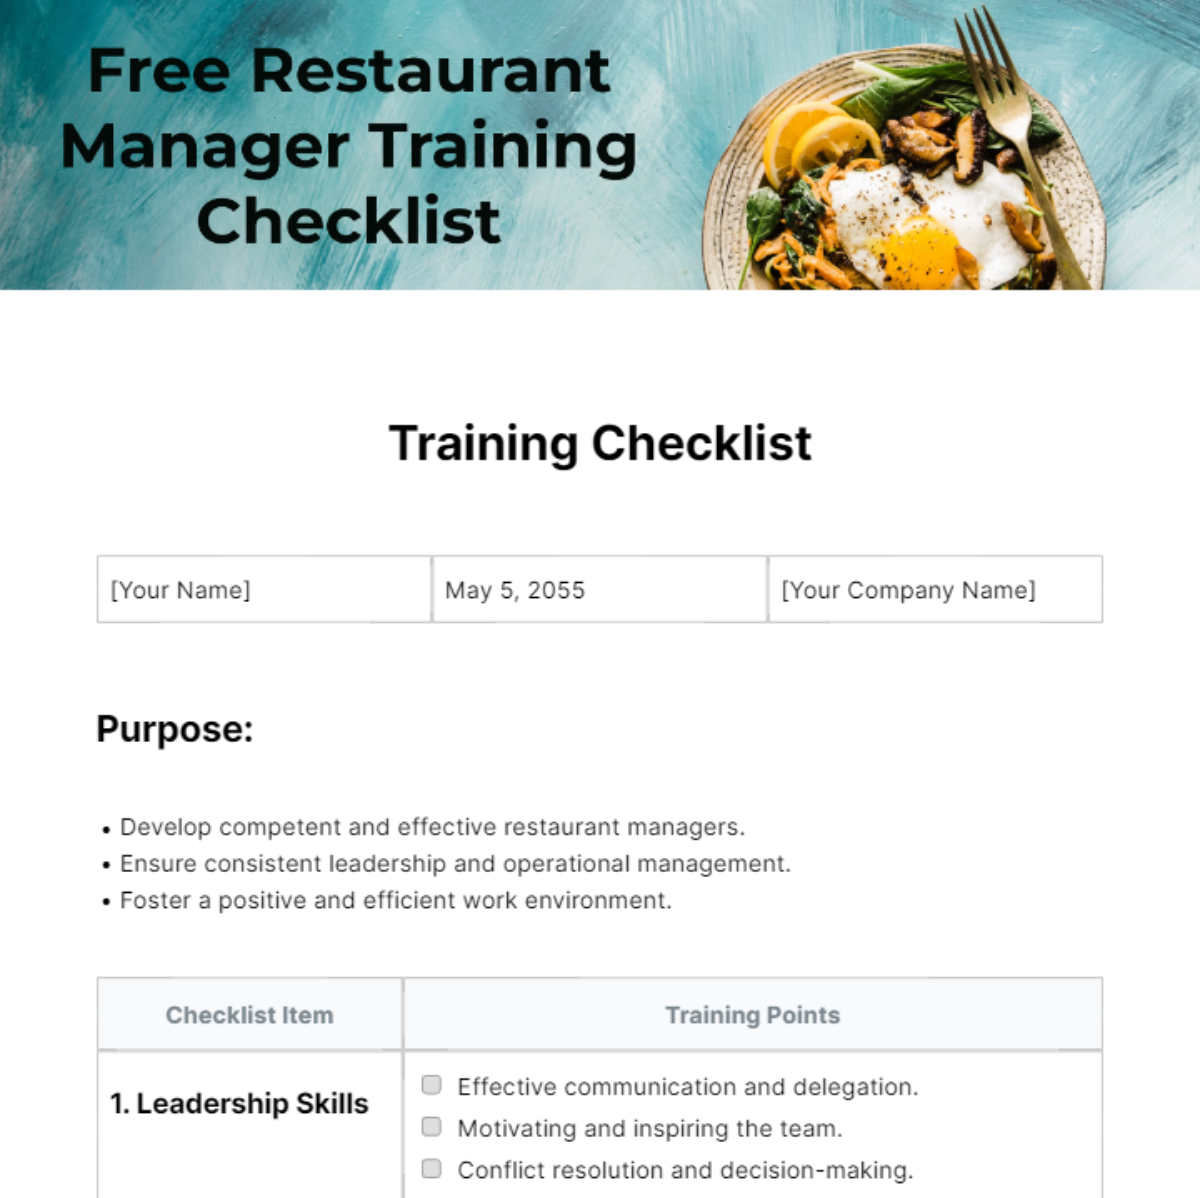 Free Restaurant Manager Training Checklist Template